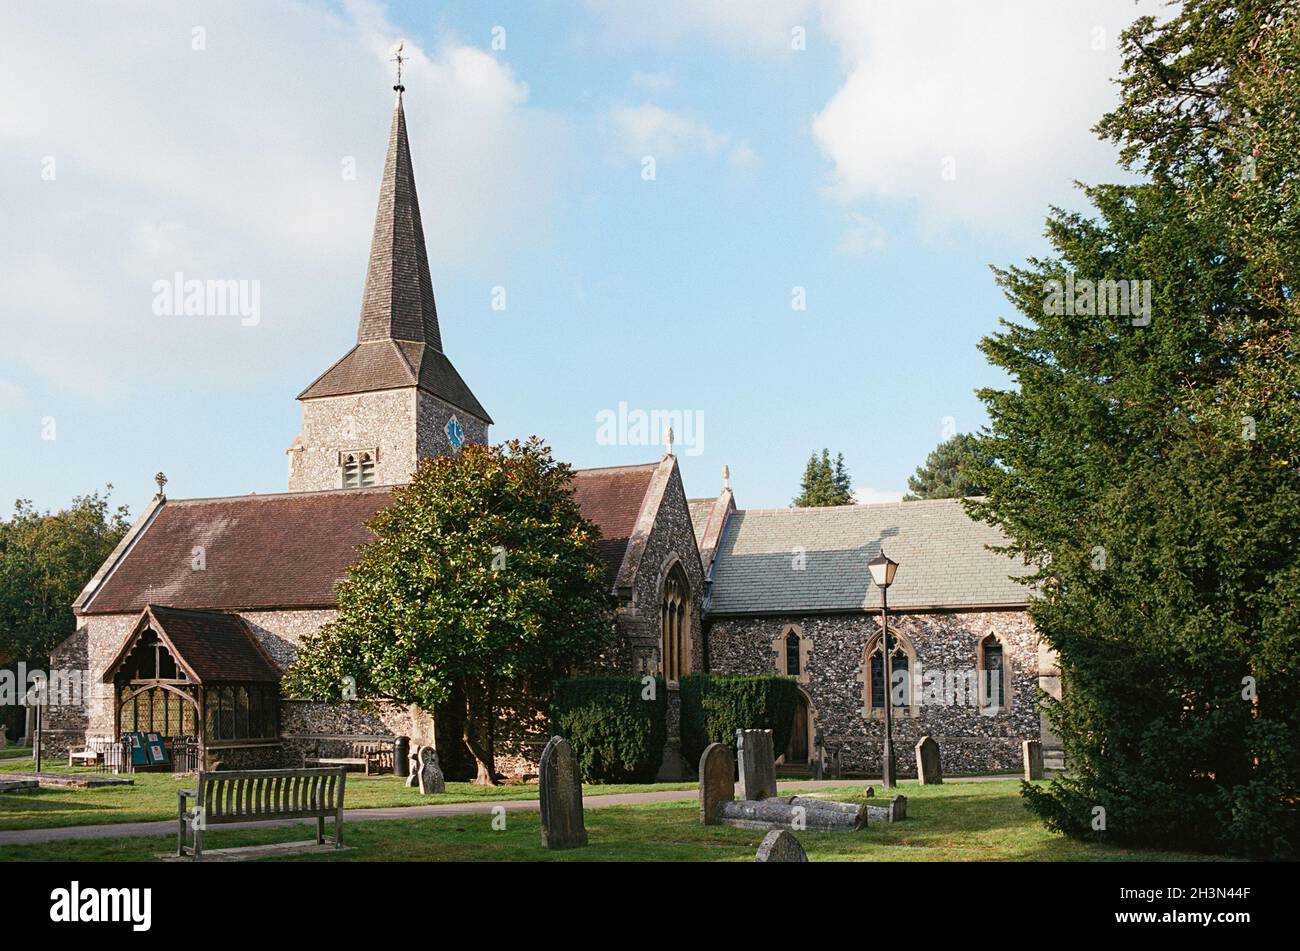 The historic restored 15th century church of St Nicolas at Chislehurst, Kent, South East England Stock Photo